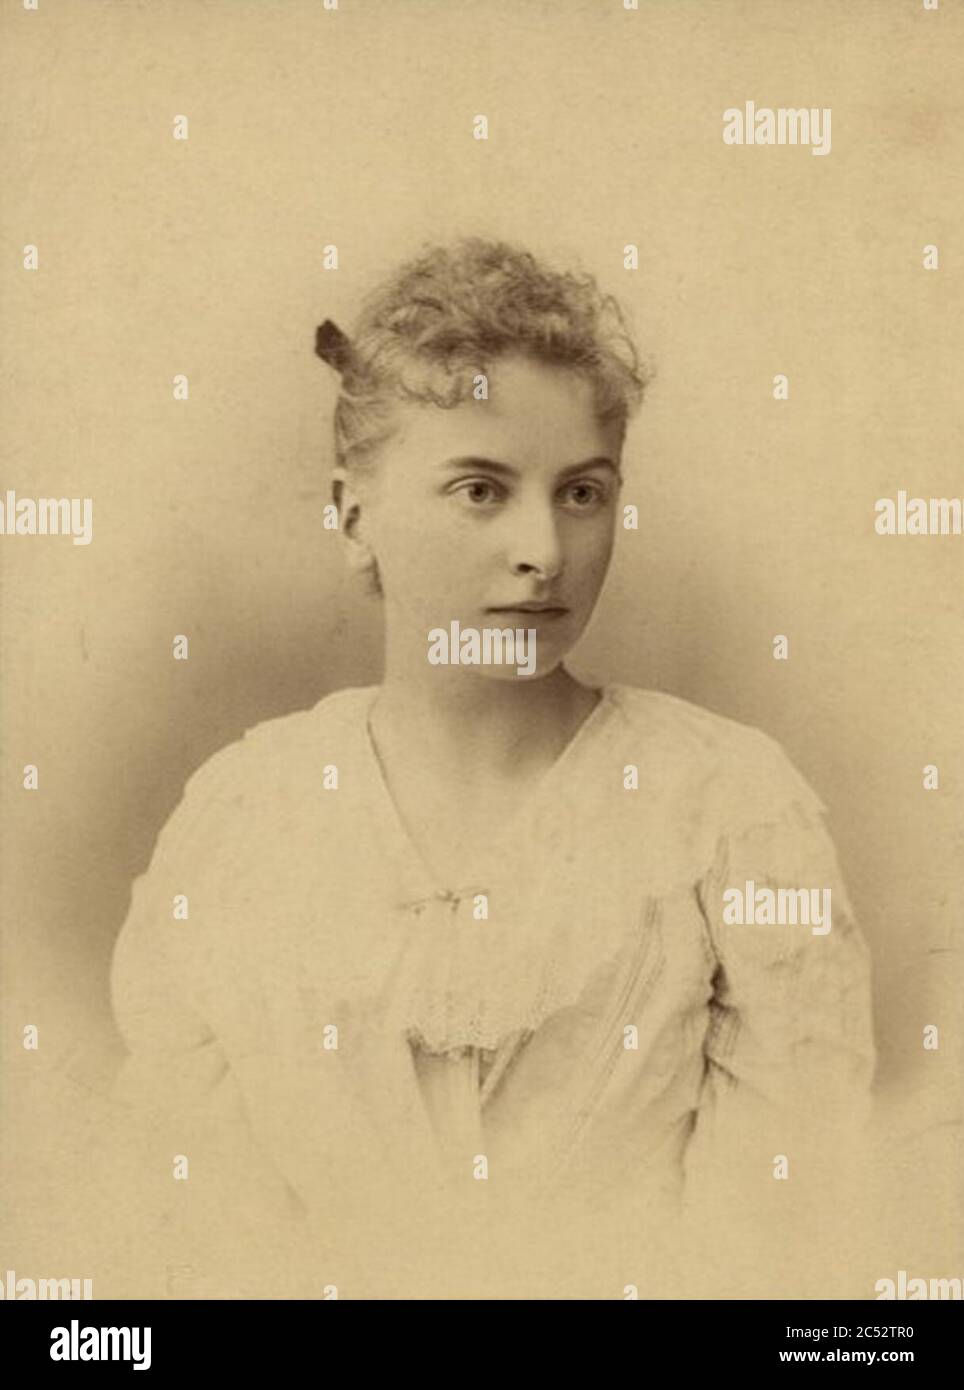 Inessa Armand young Stock Photo - Alamy